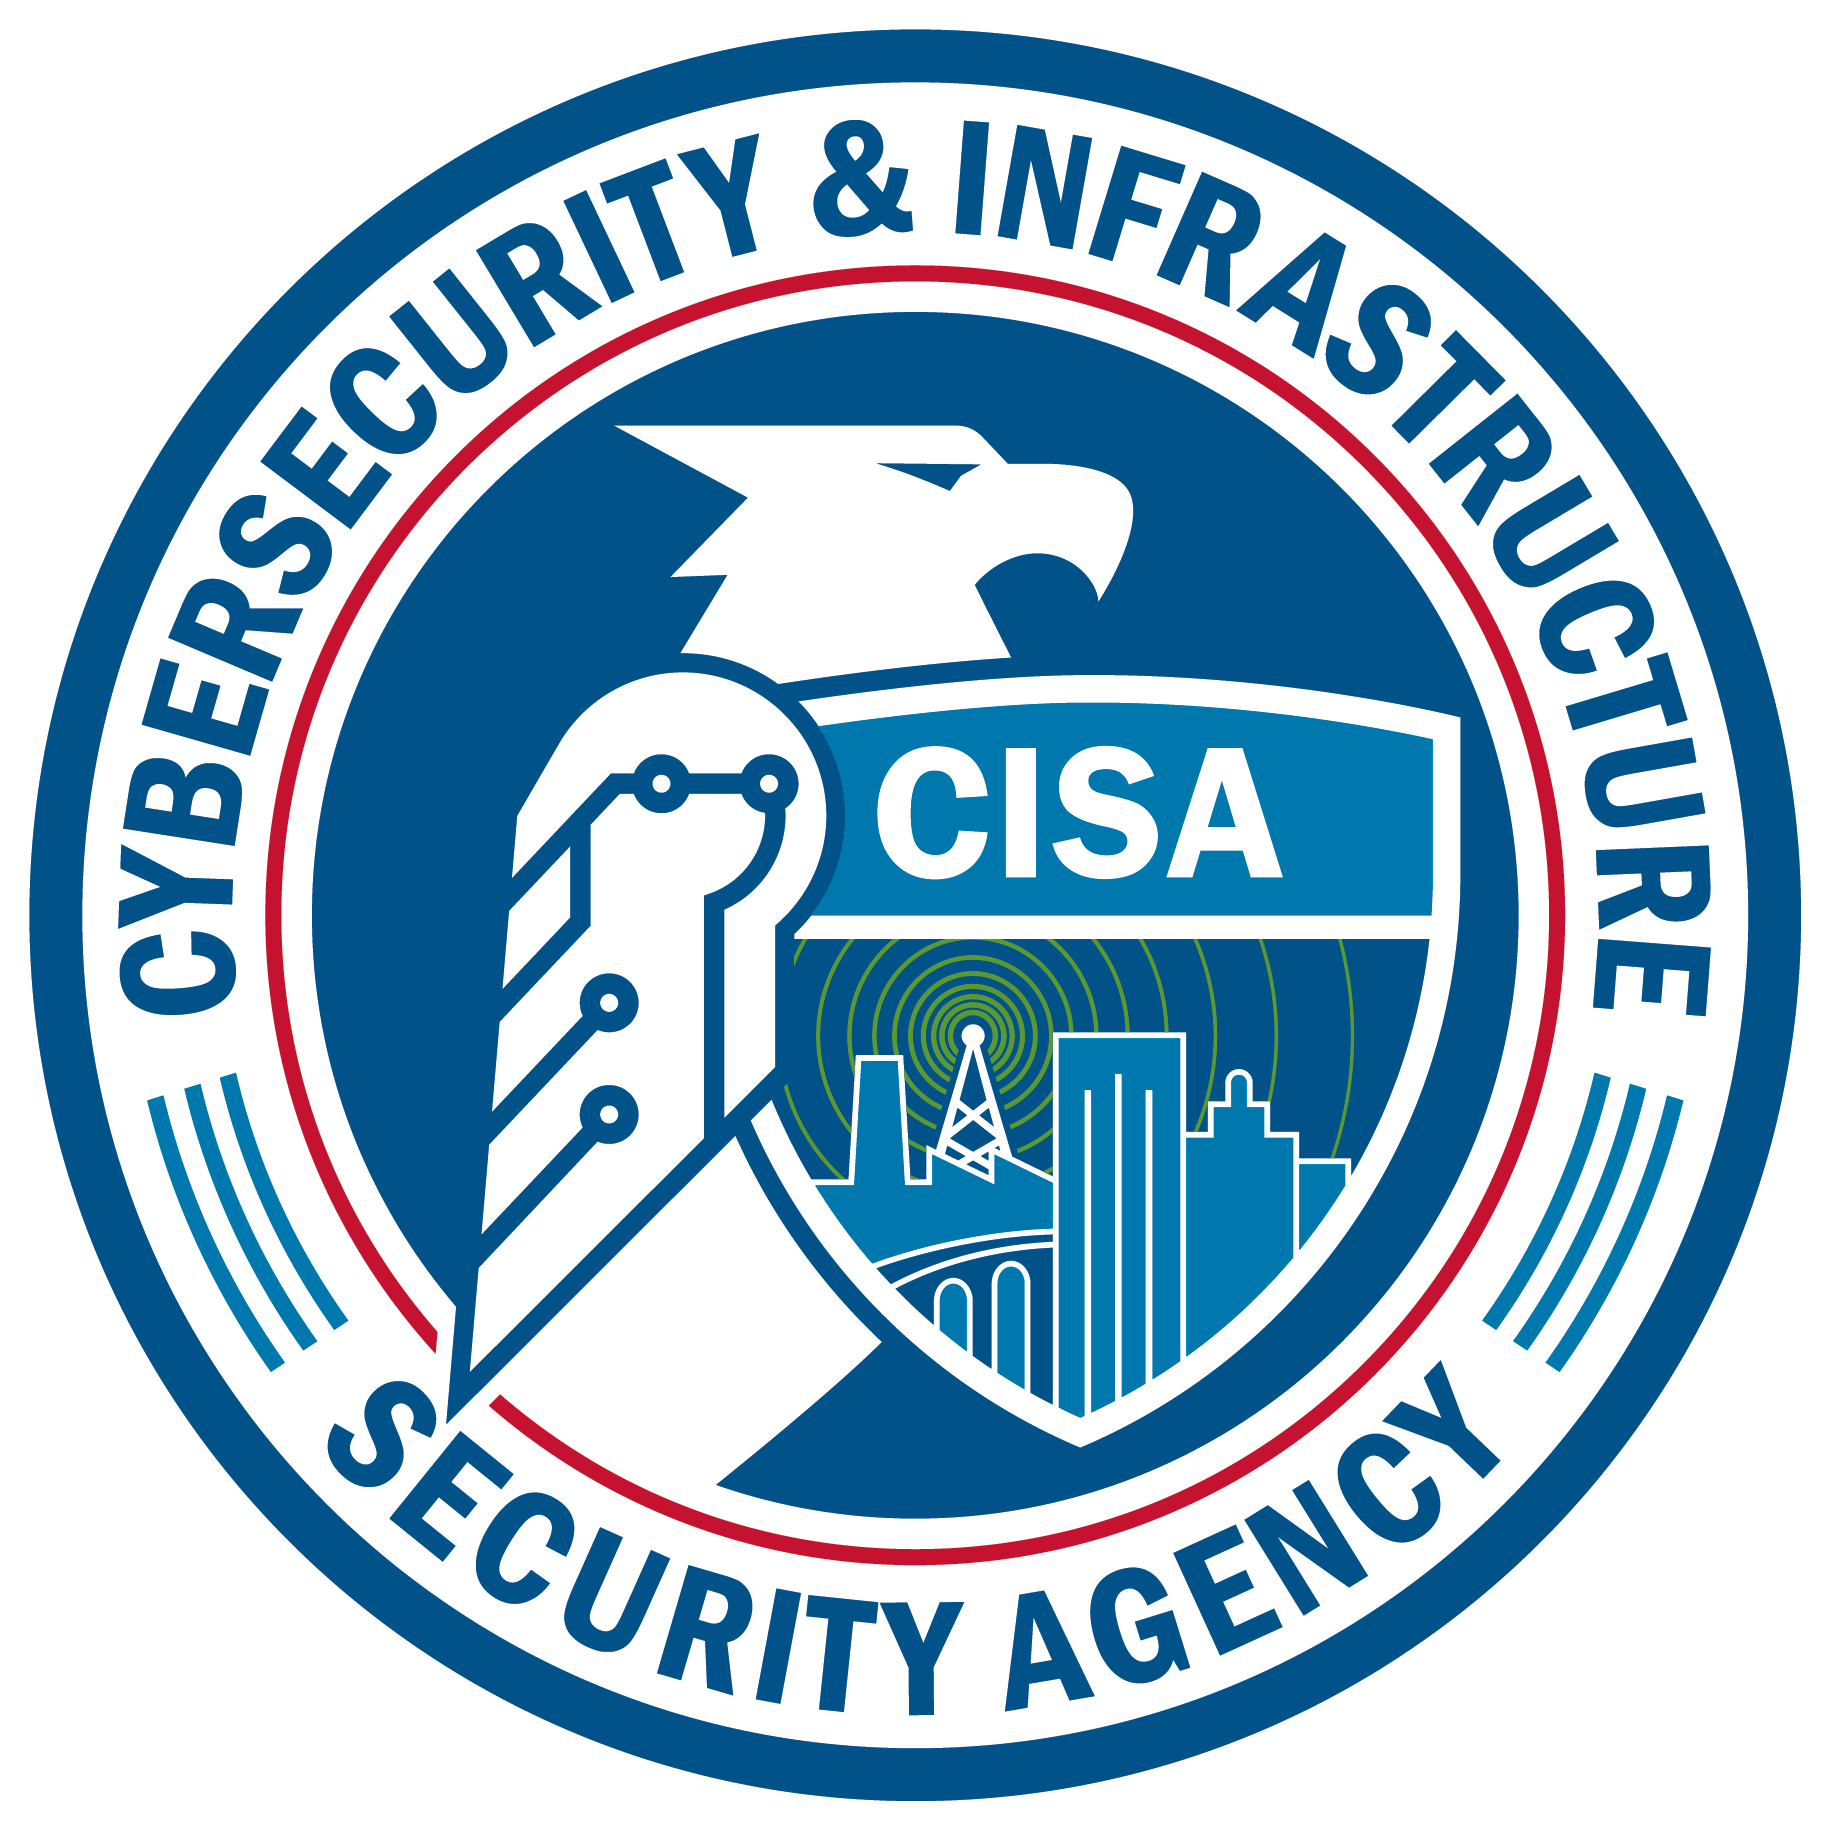 cisa cybersecurity - Rsecurity & Infrastru Cisa 813 Security Agency